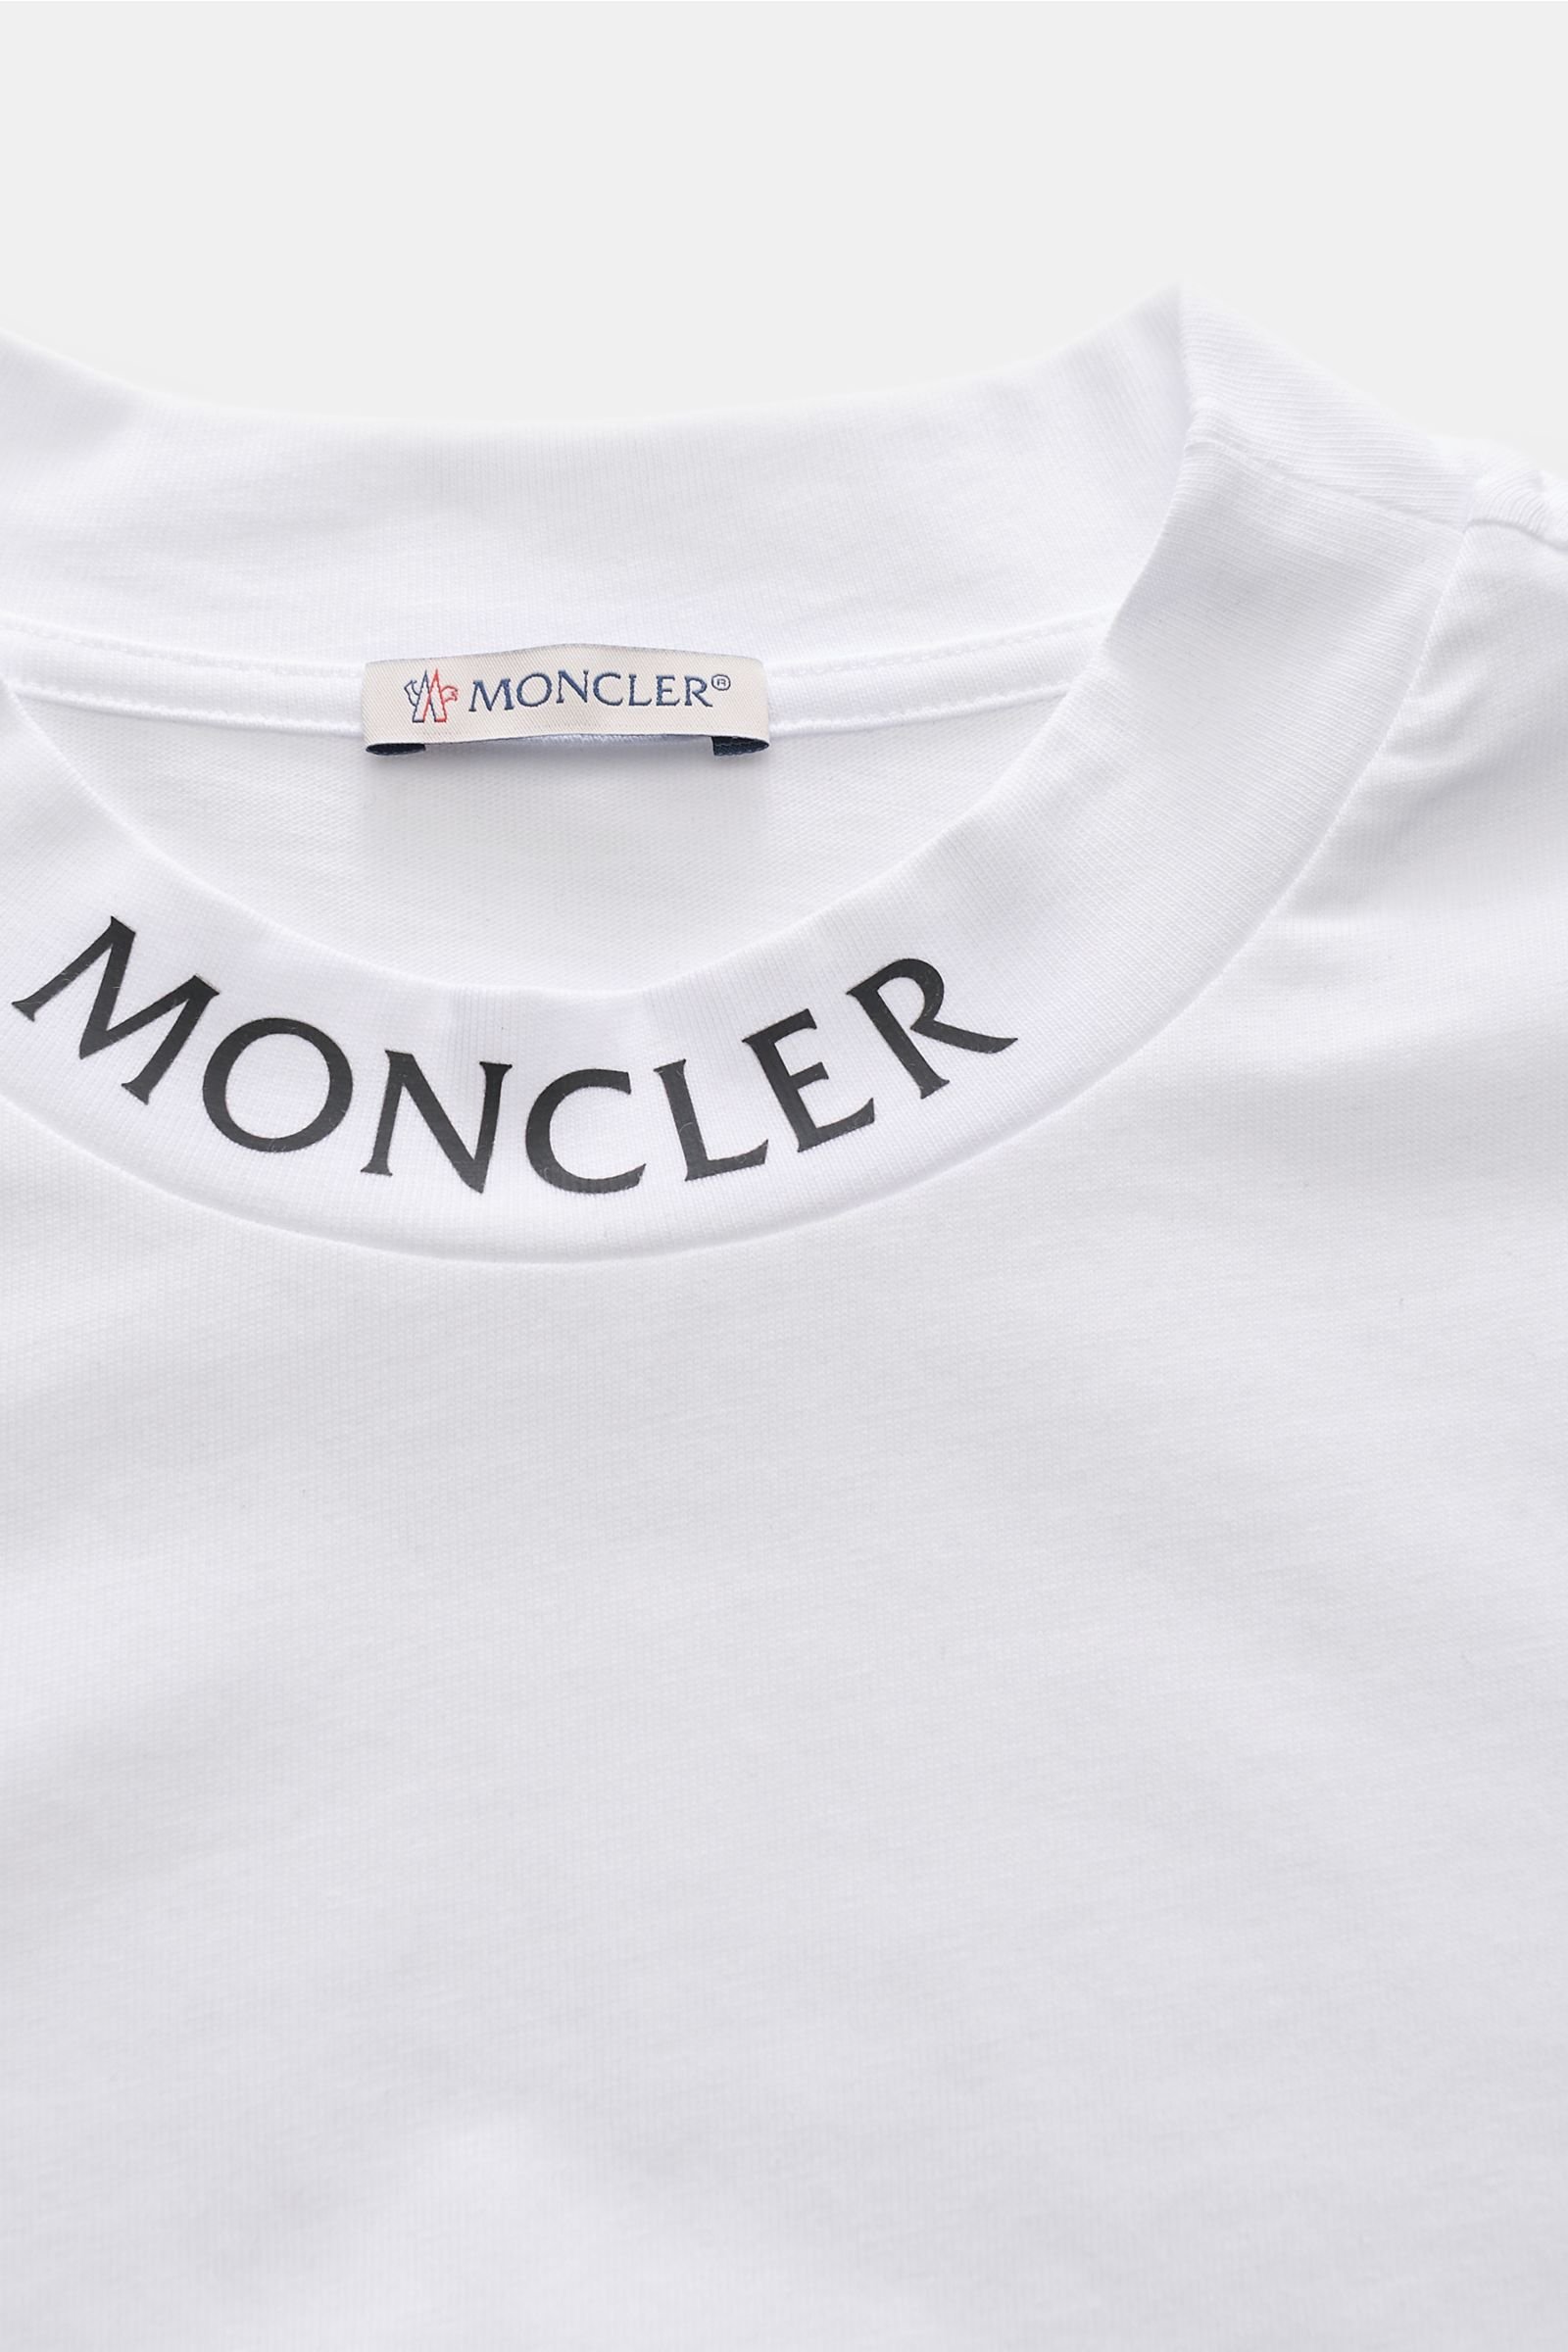 MONCLER crew neck T-shirt white | BRAUN Hamburg